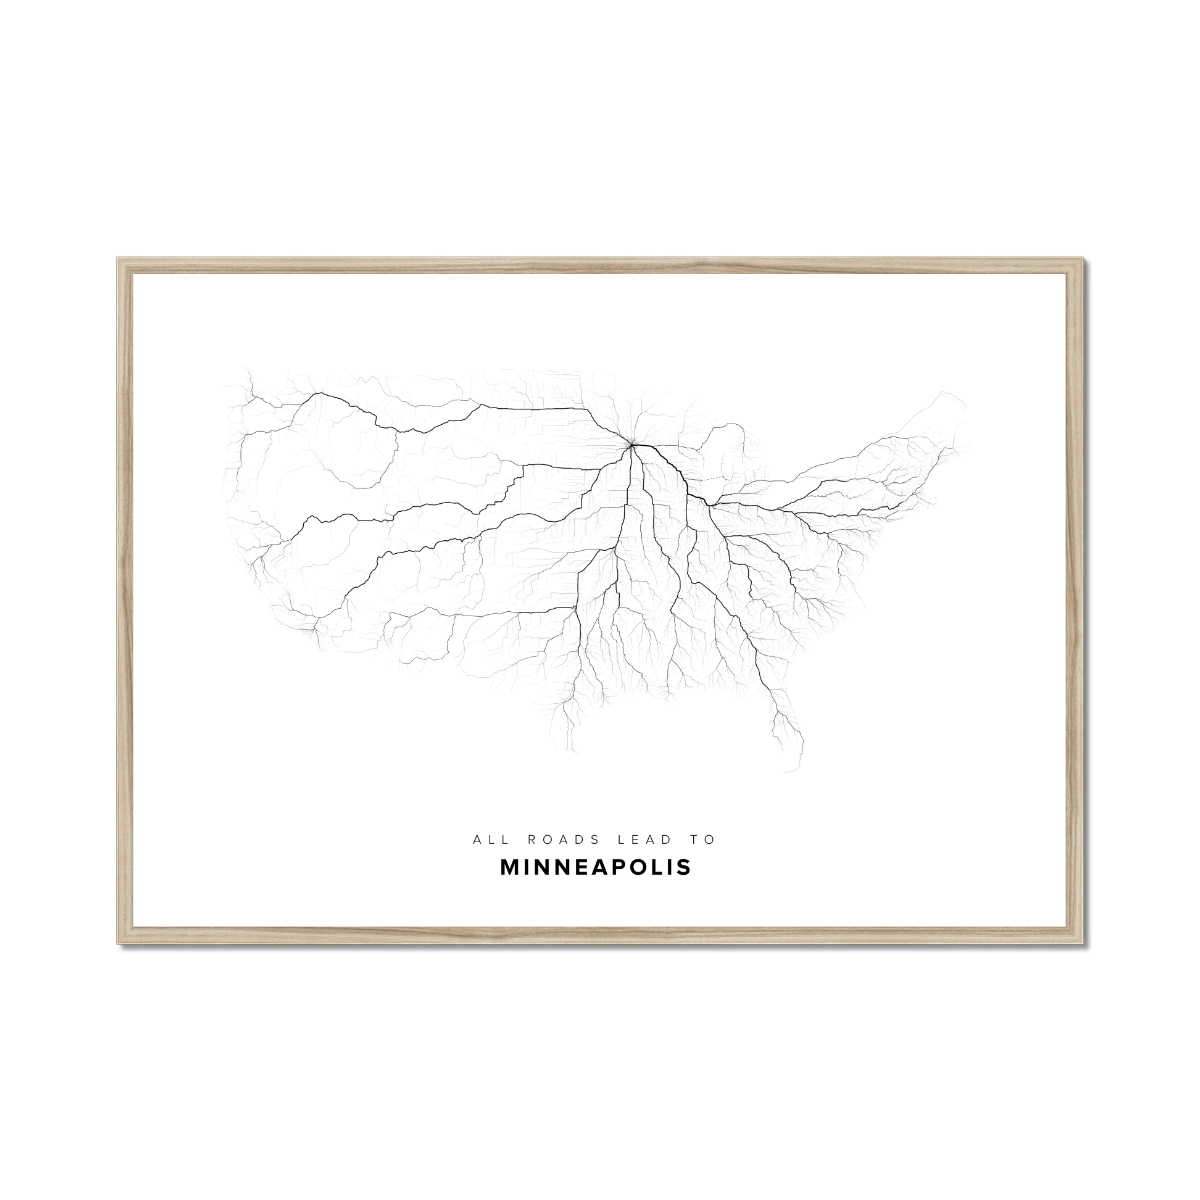 All roads lead to Minneapolis (United States of America) Fine Art Map Print